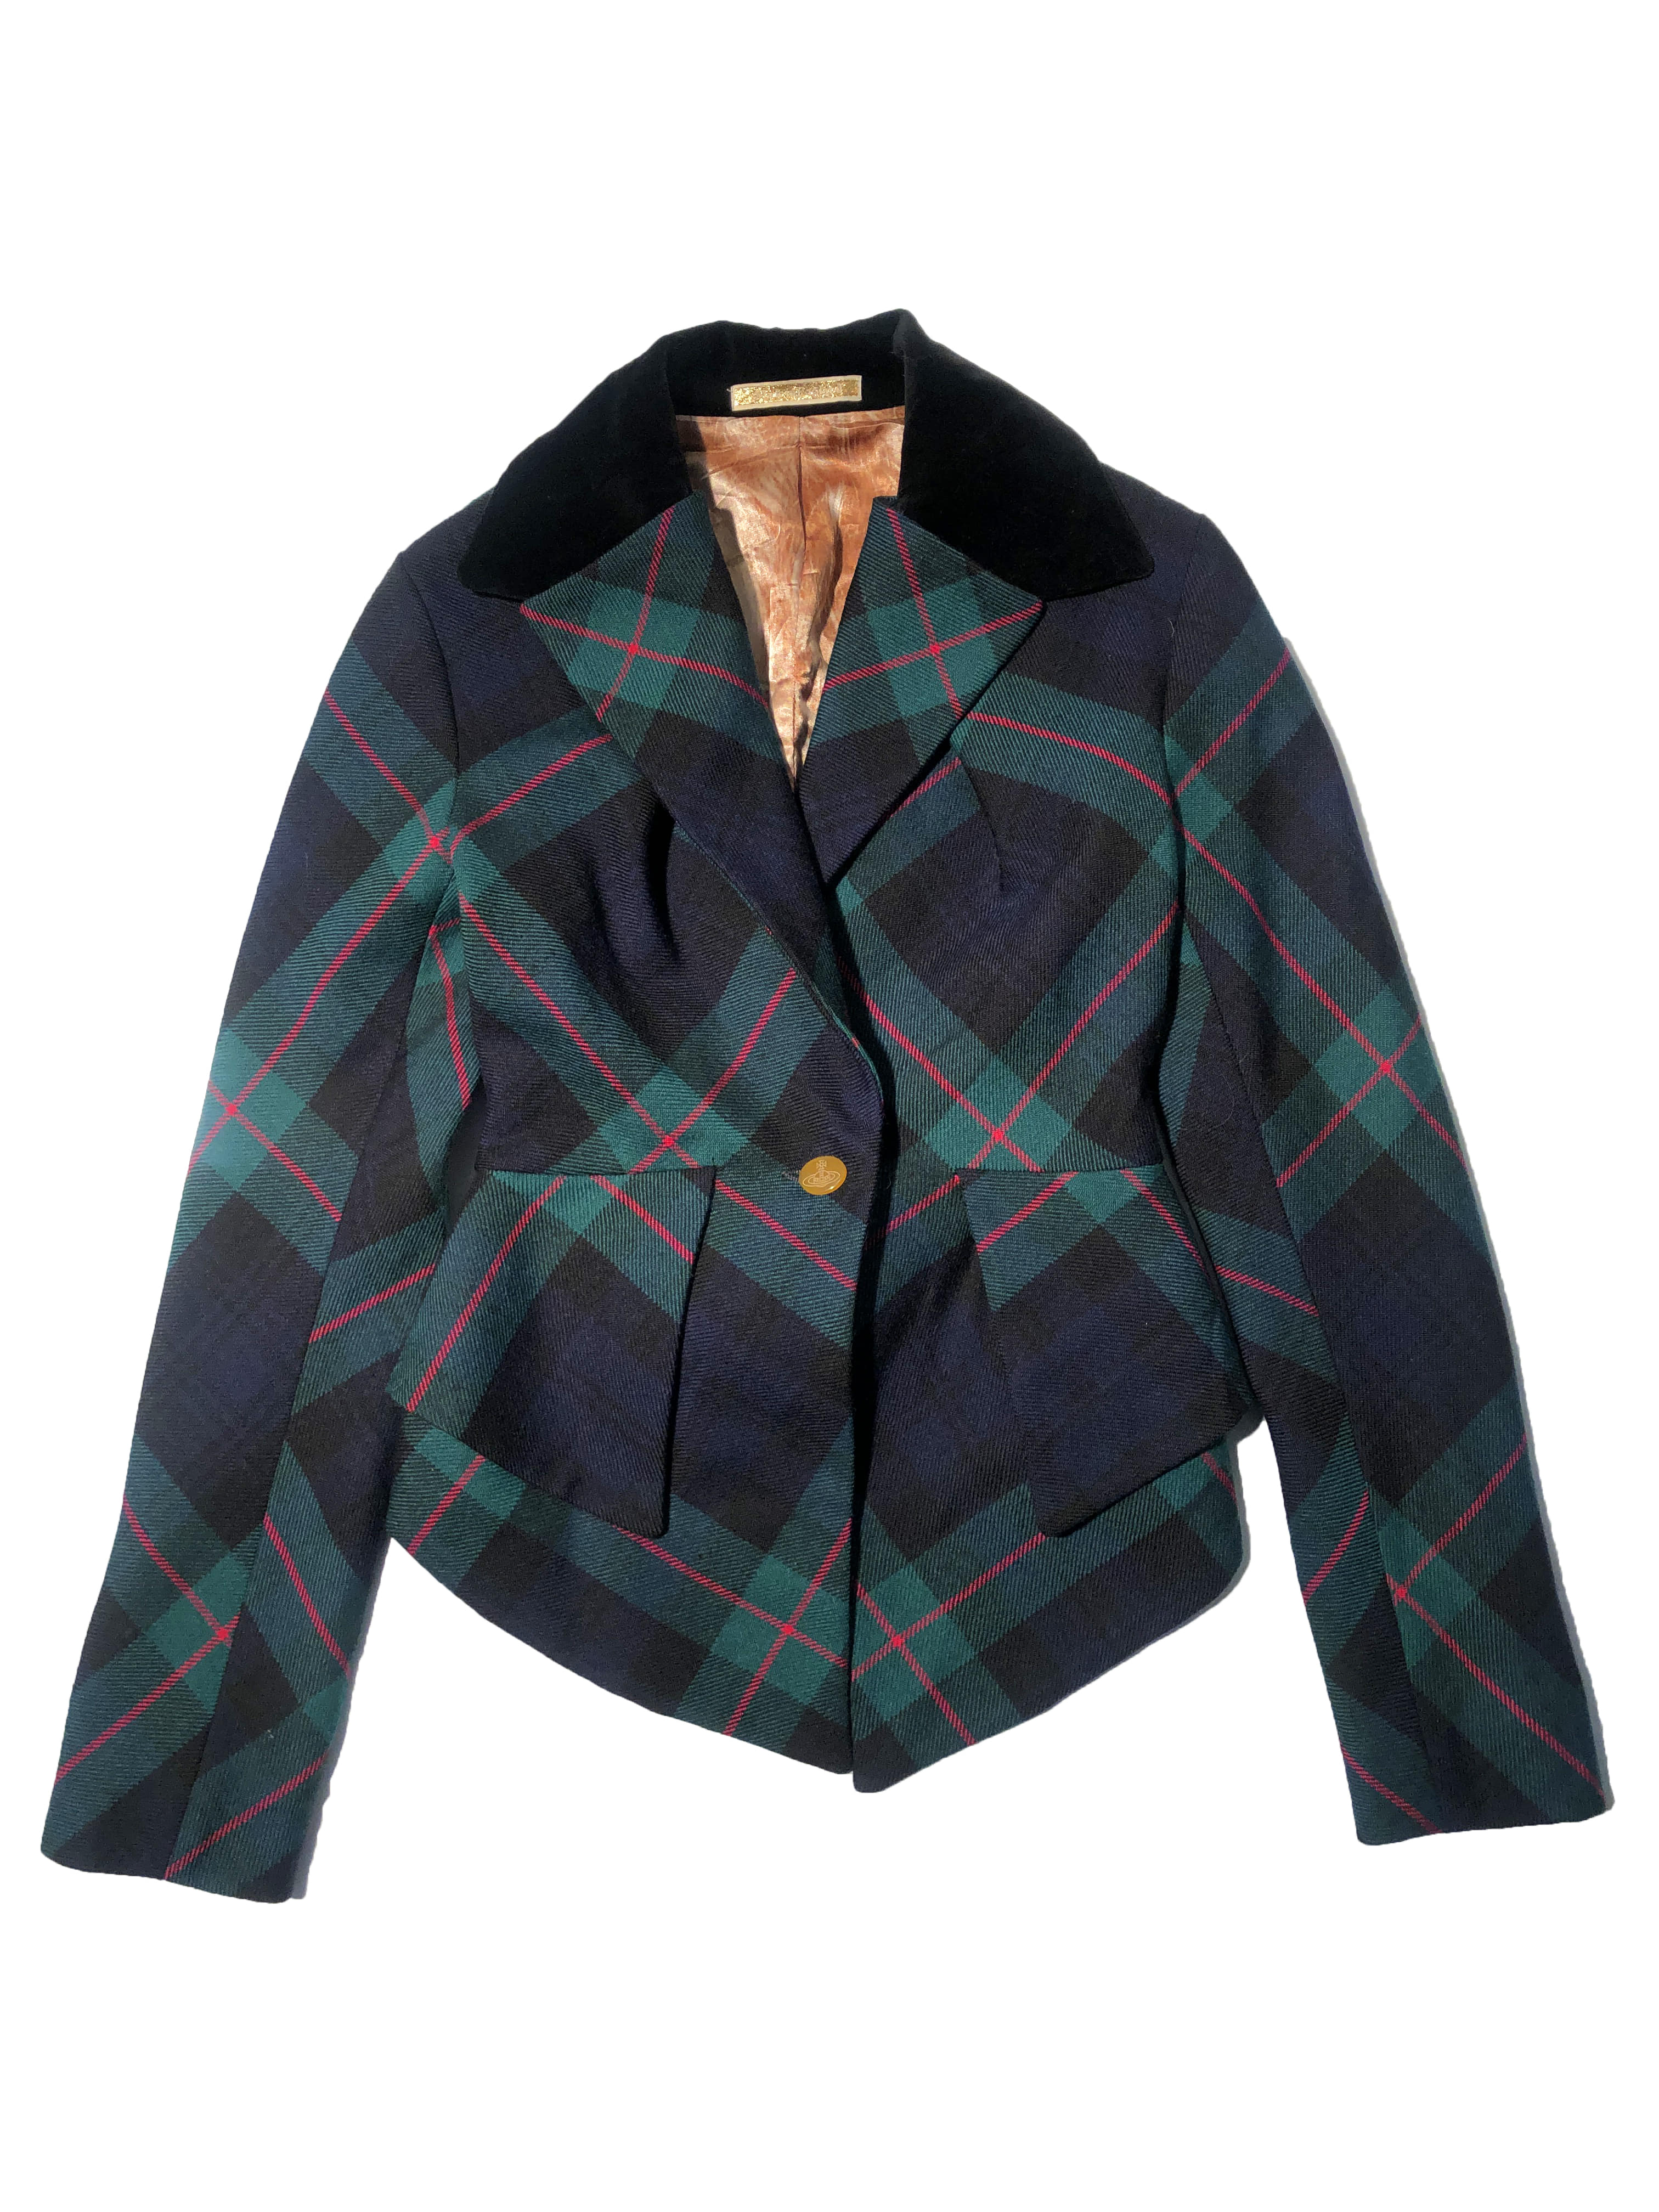 Vivienne Westwood 90s gold label wool jacket